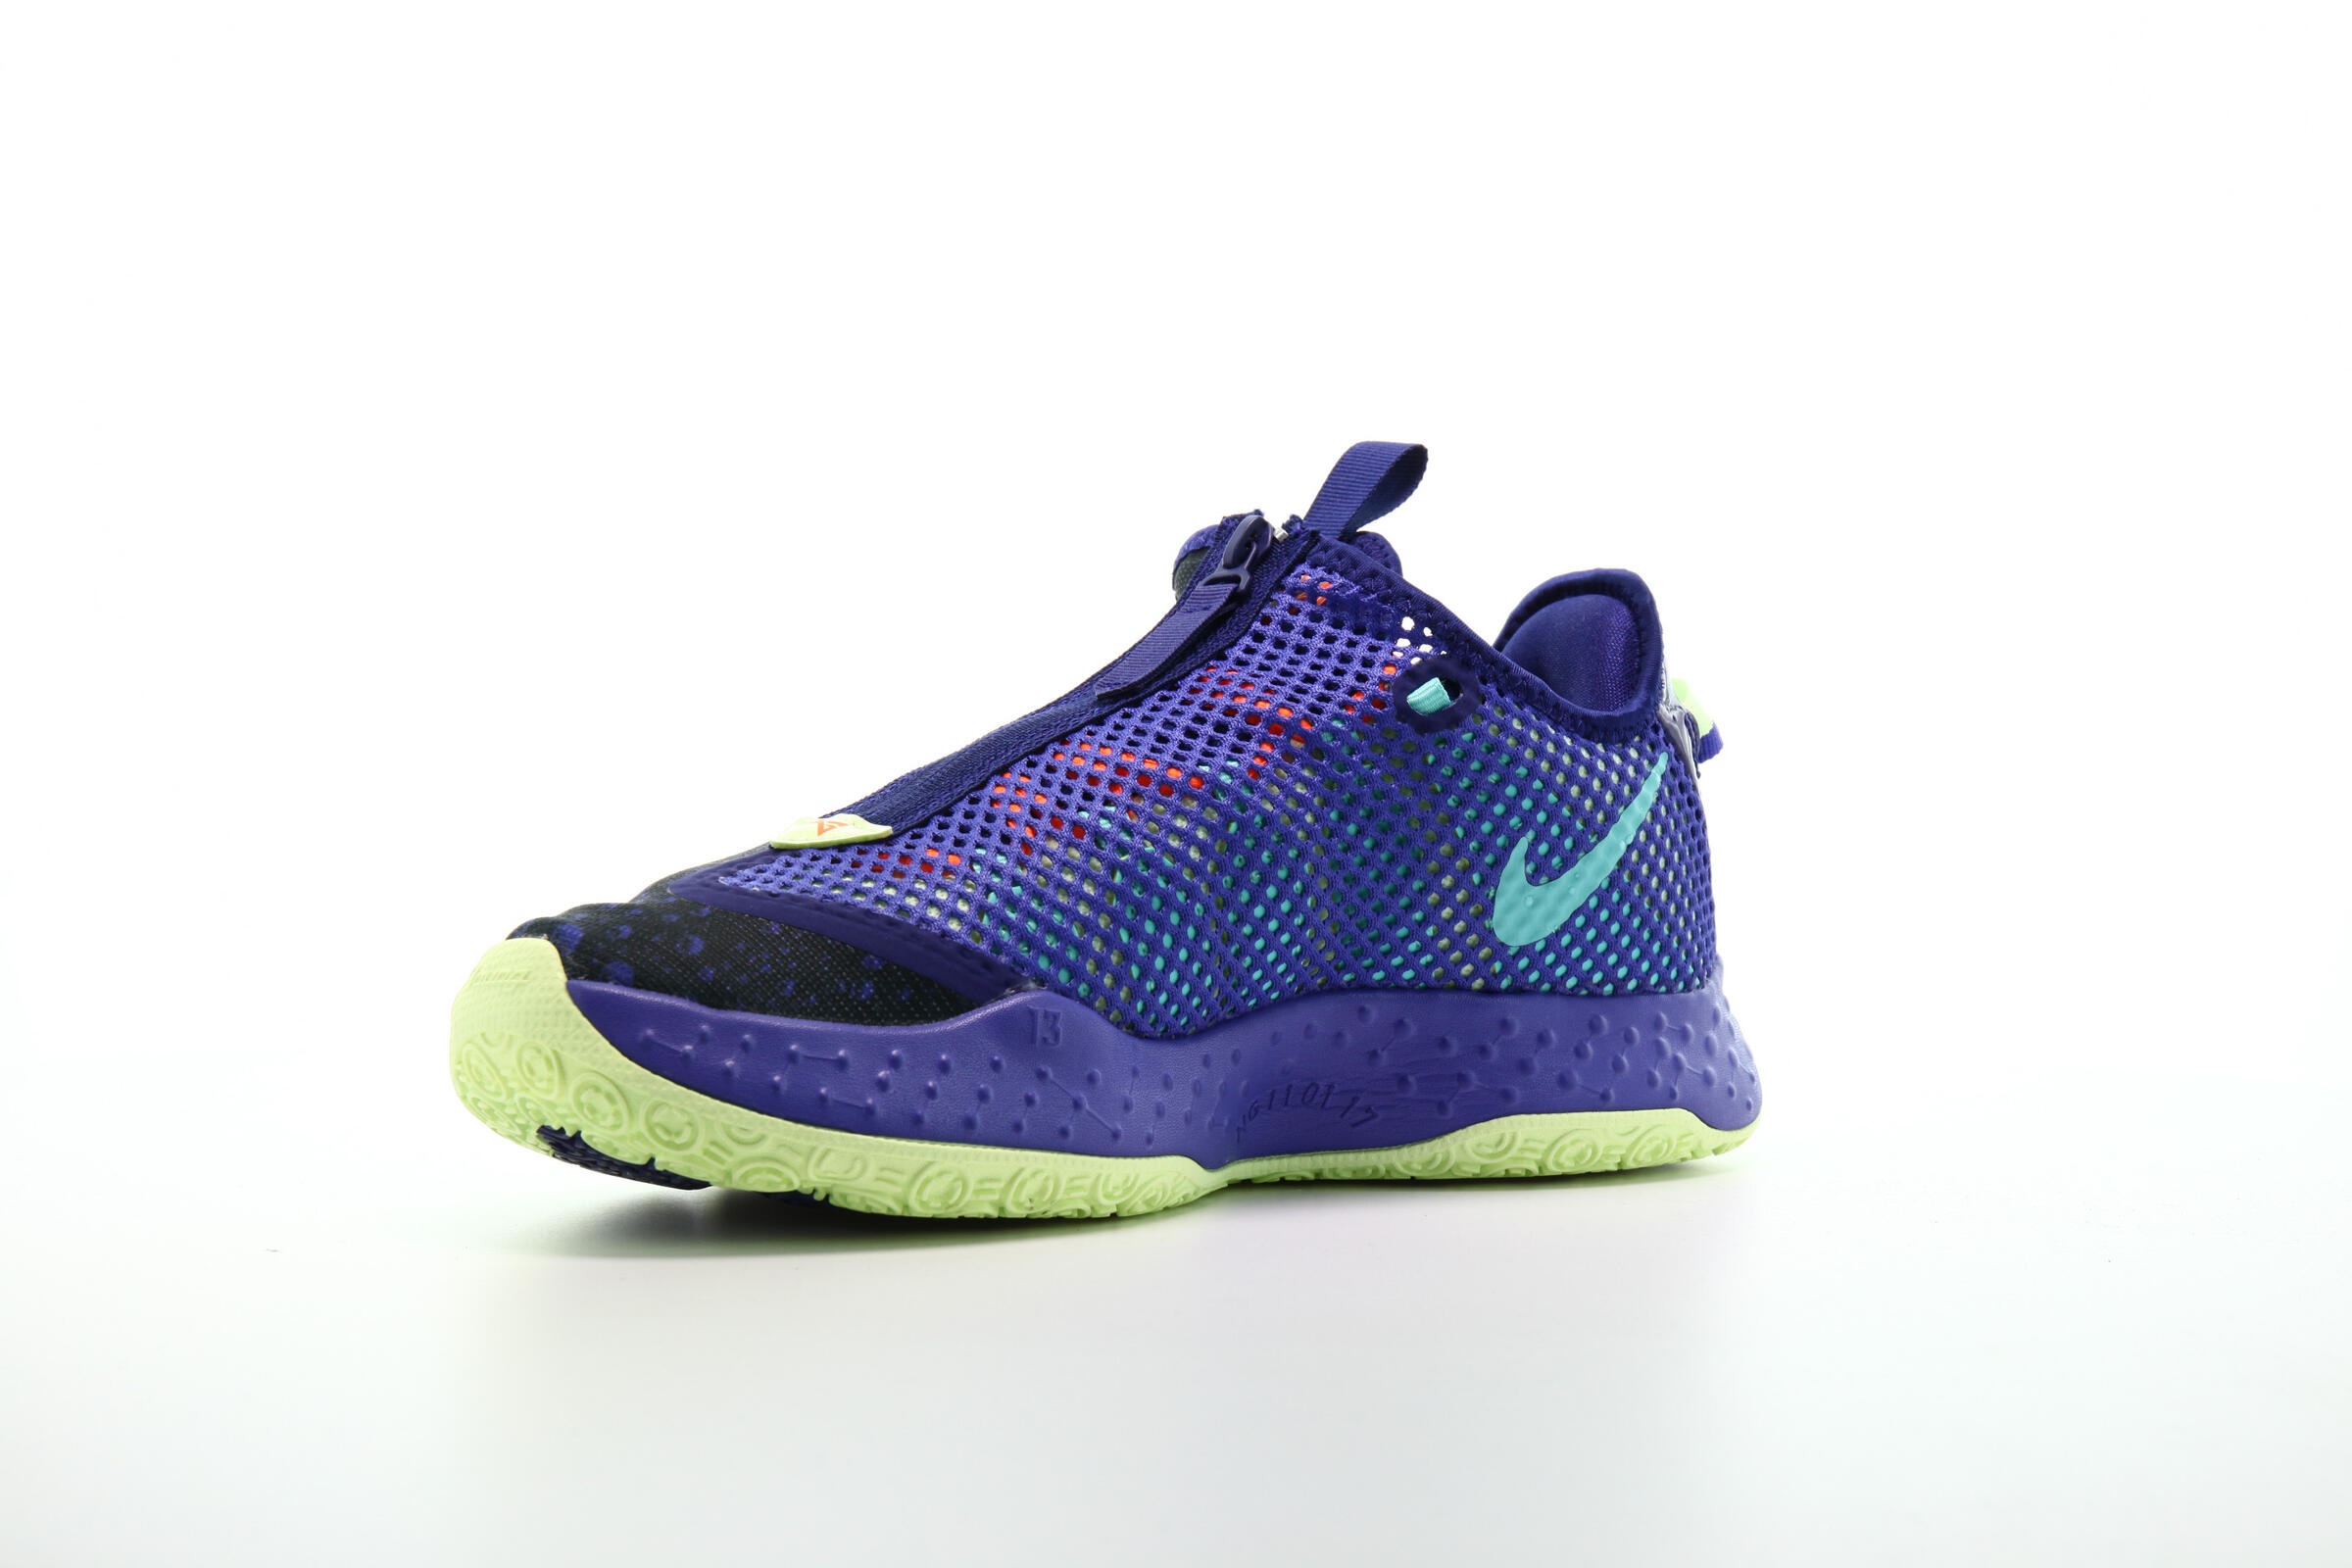 Nike PG 4 G "Regency Purple"